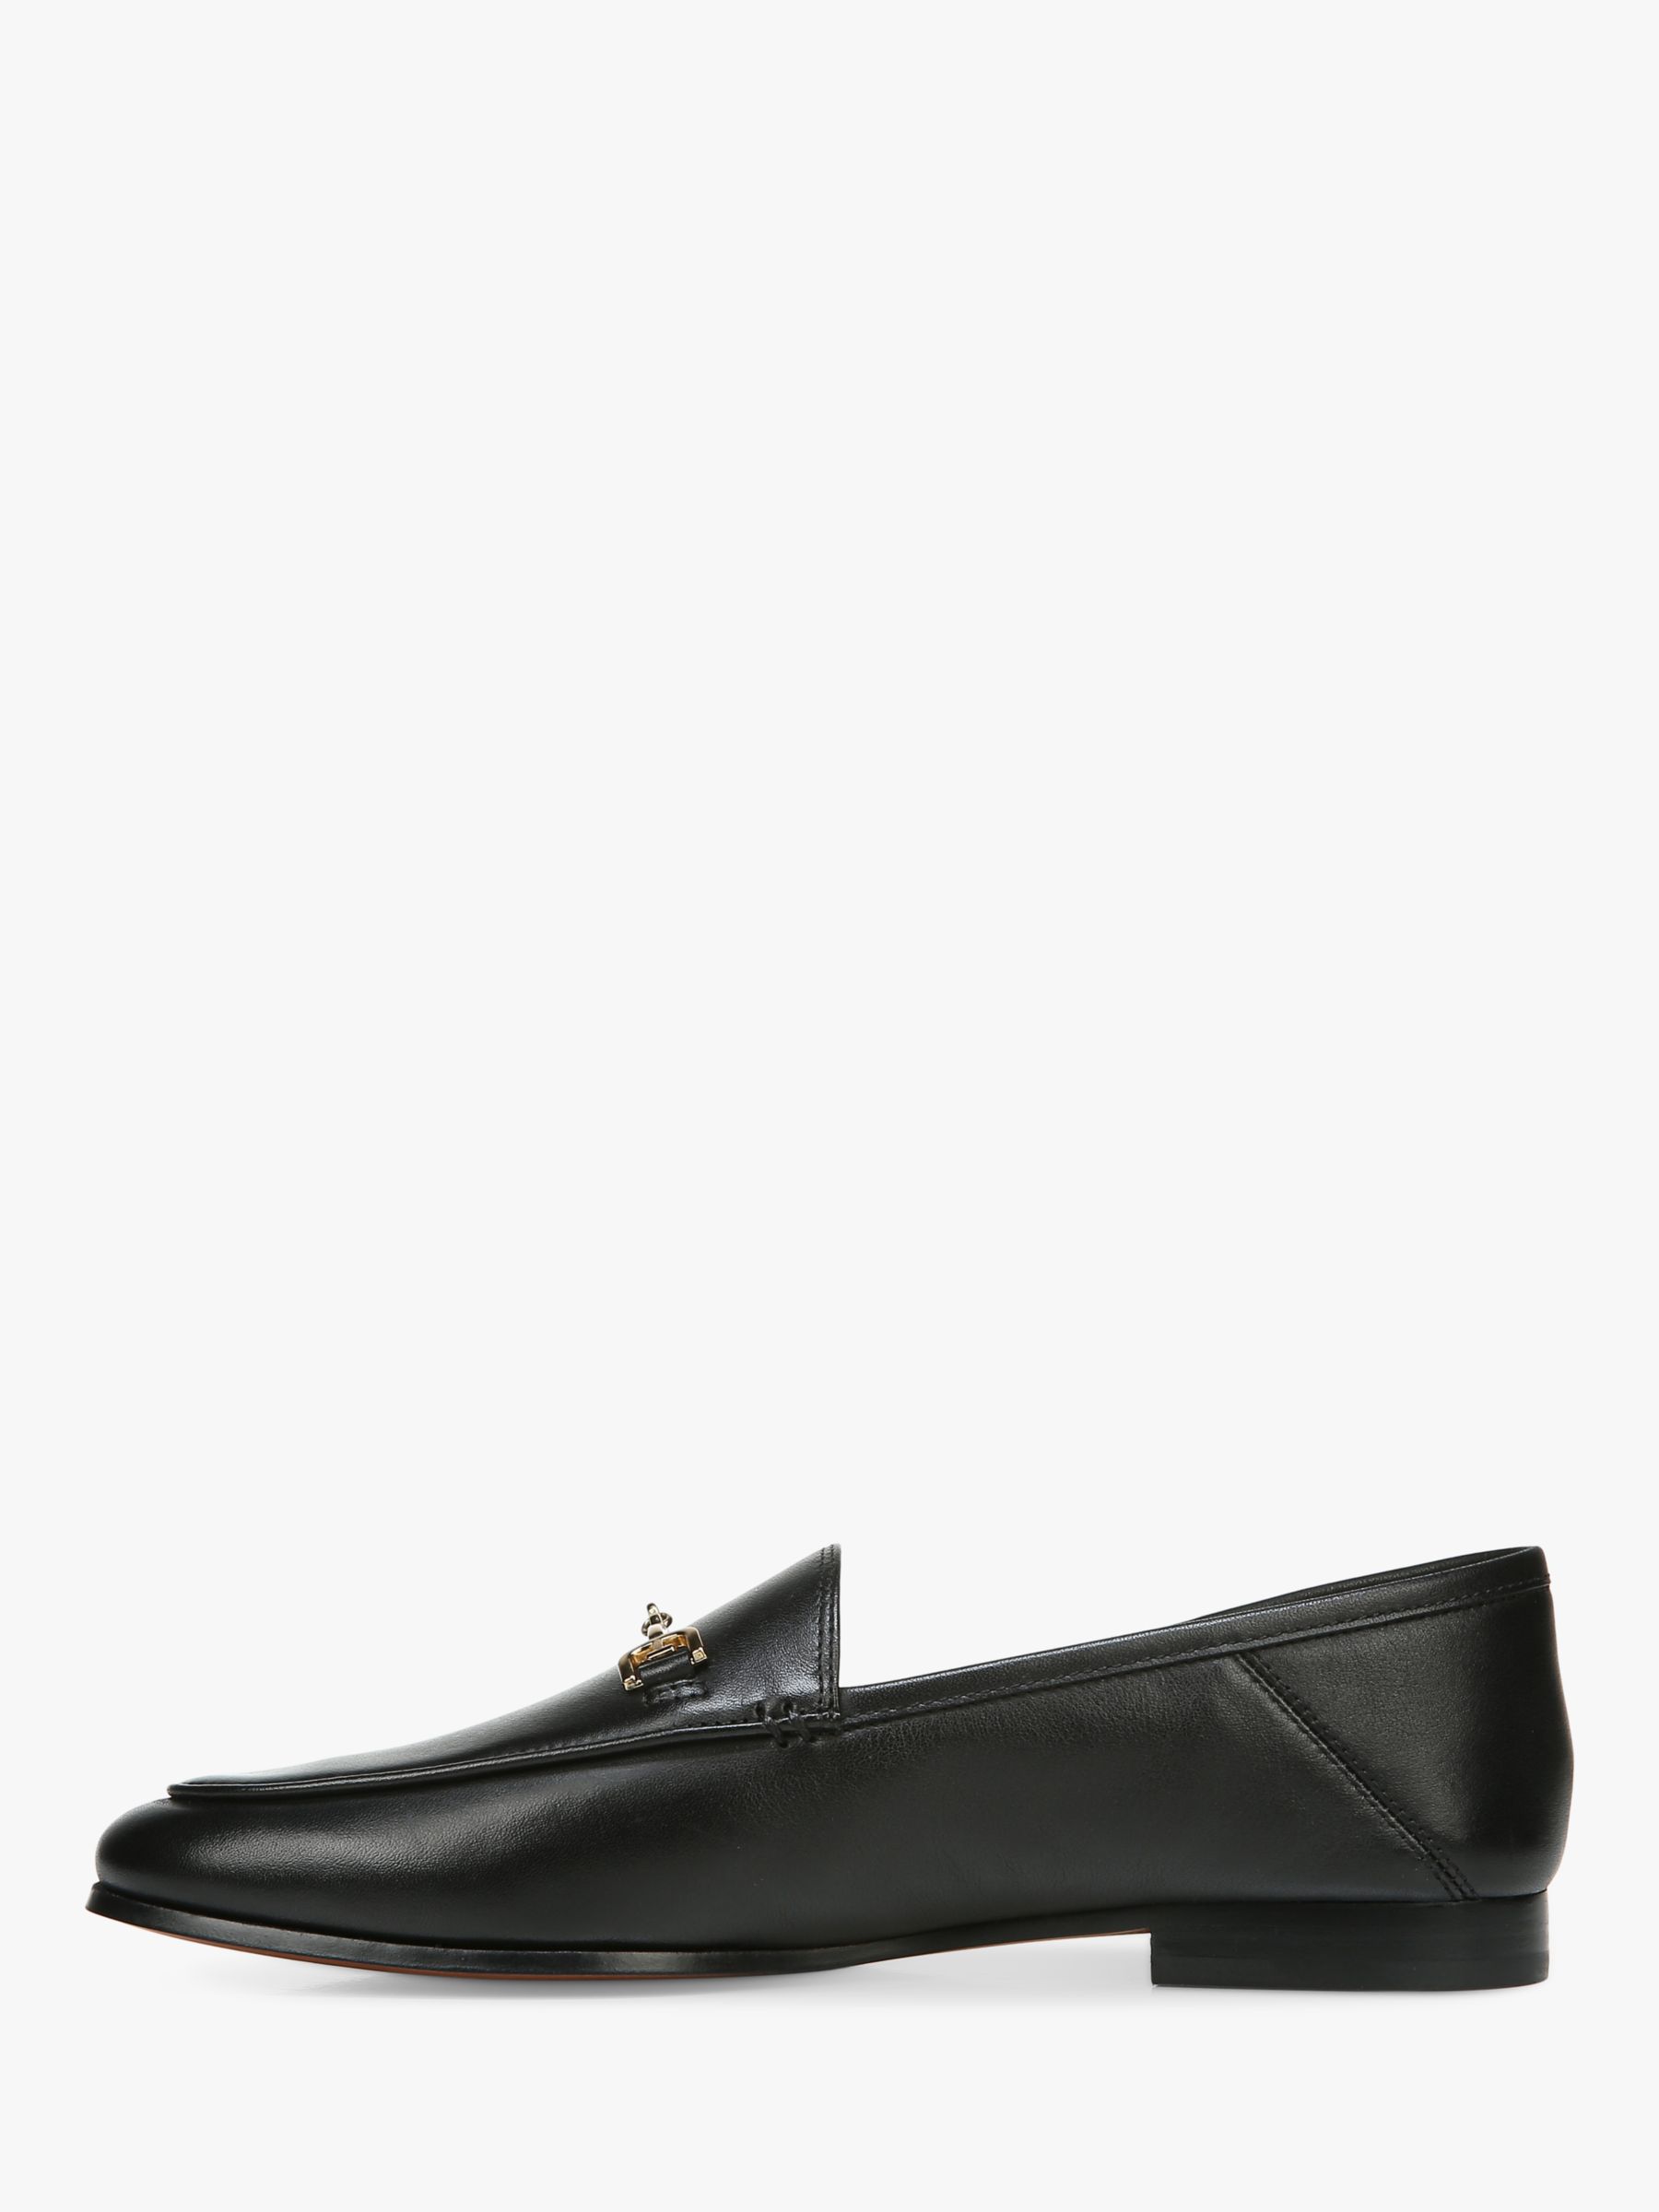 Sam Edelman Loraine Leather Loafers, Black, 3